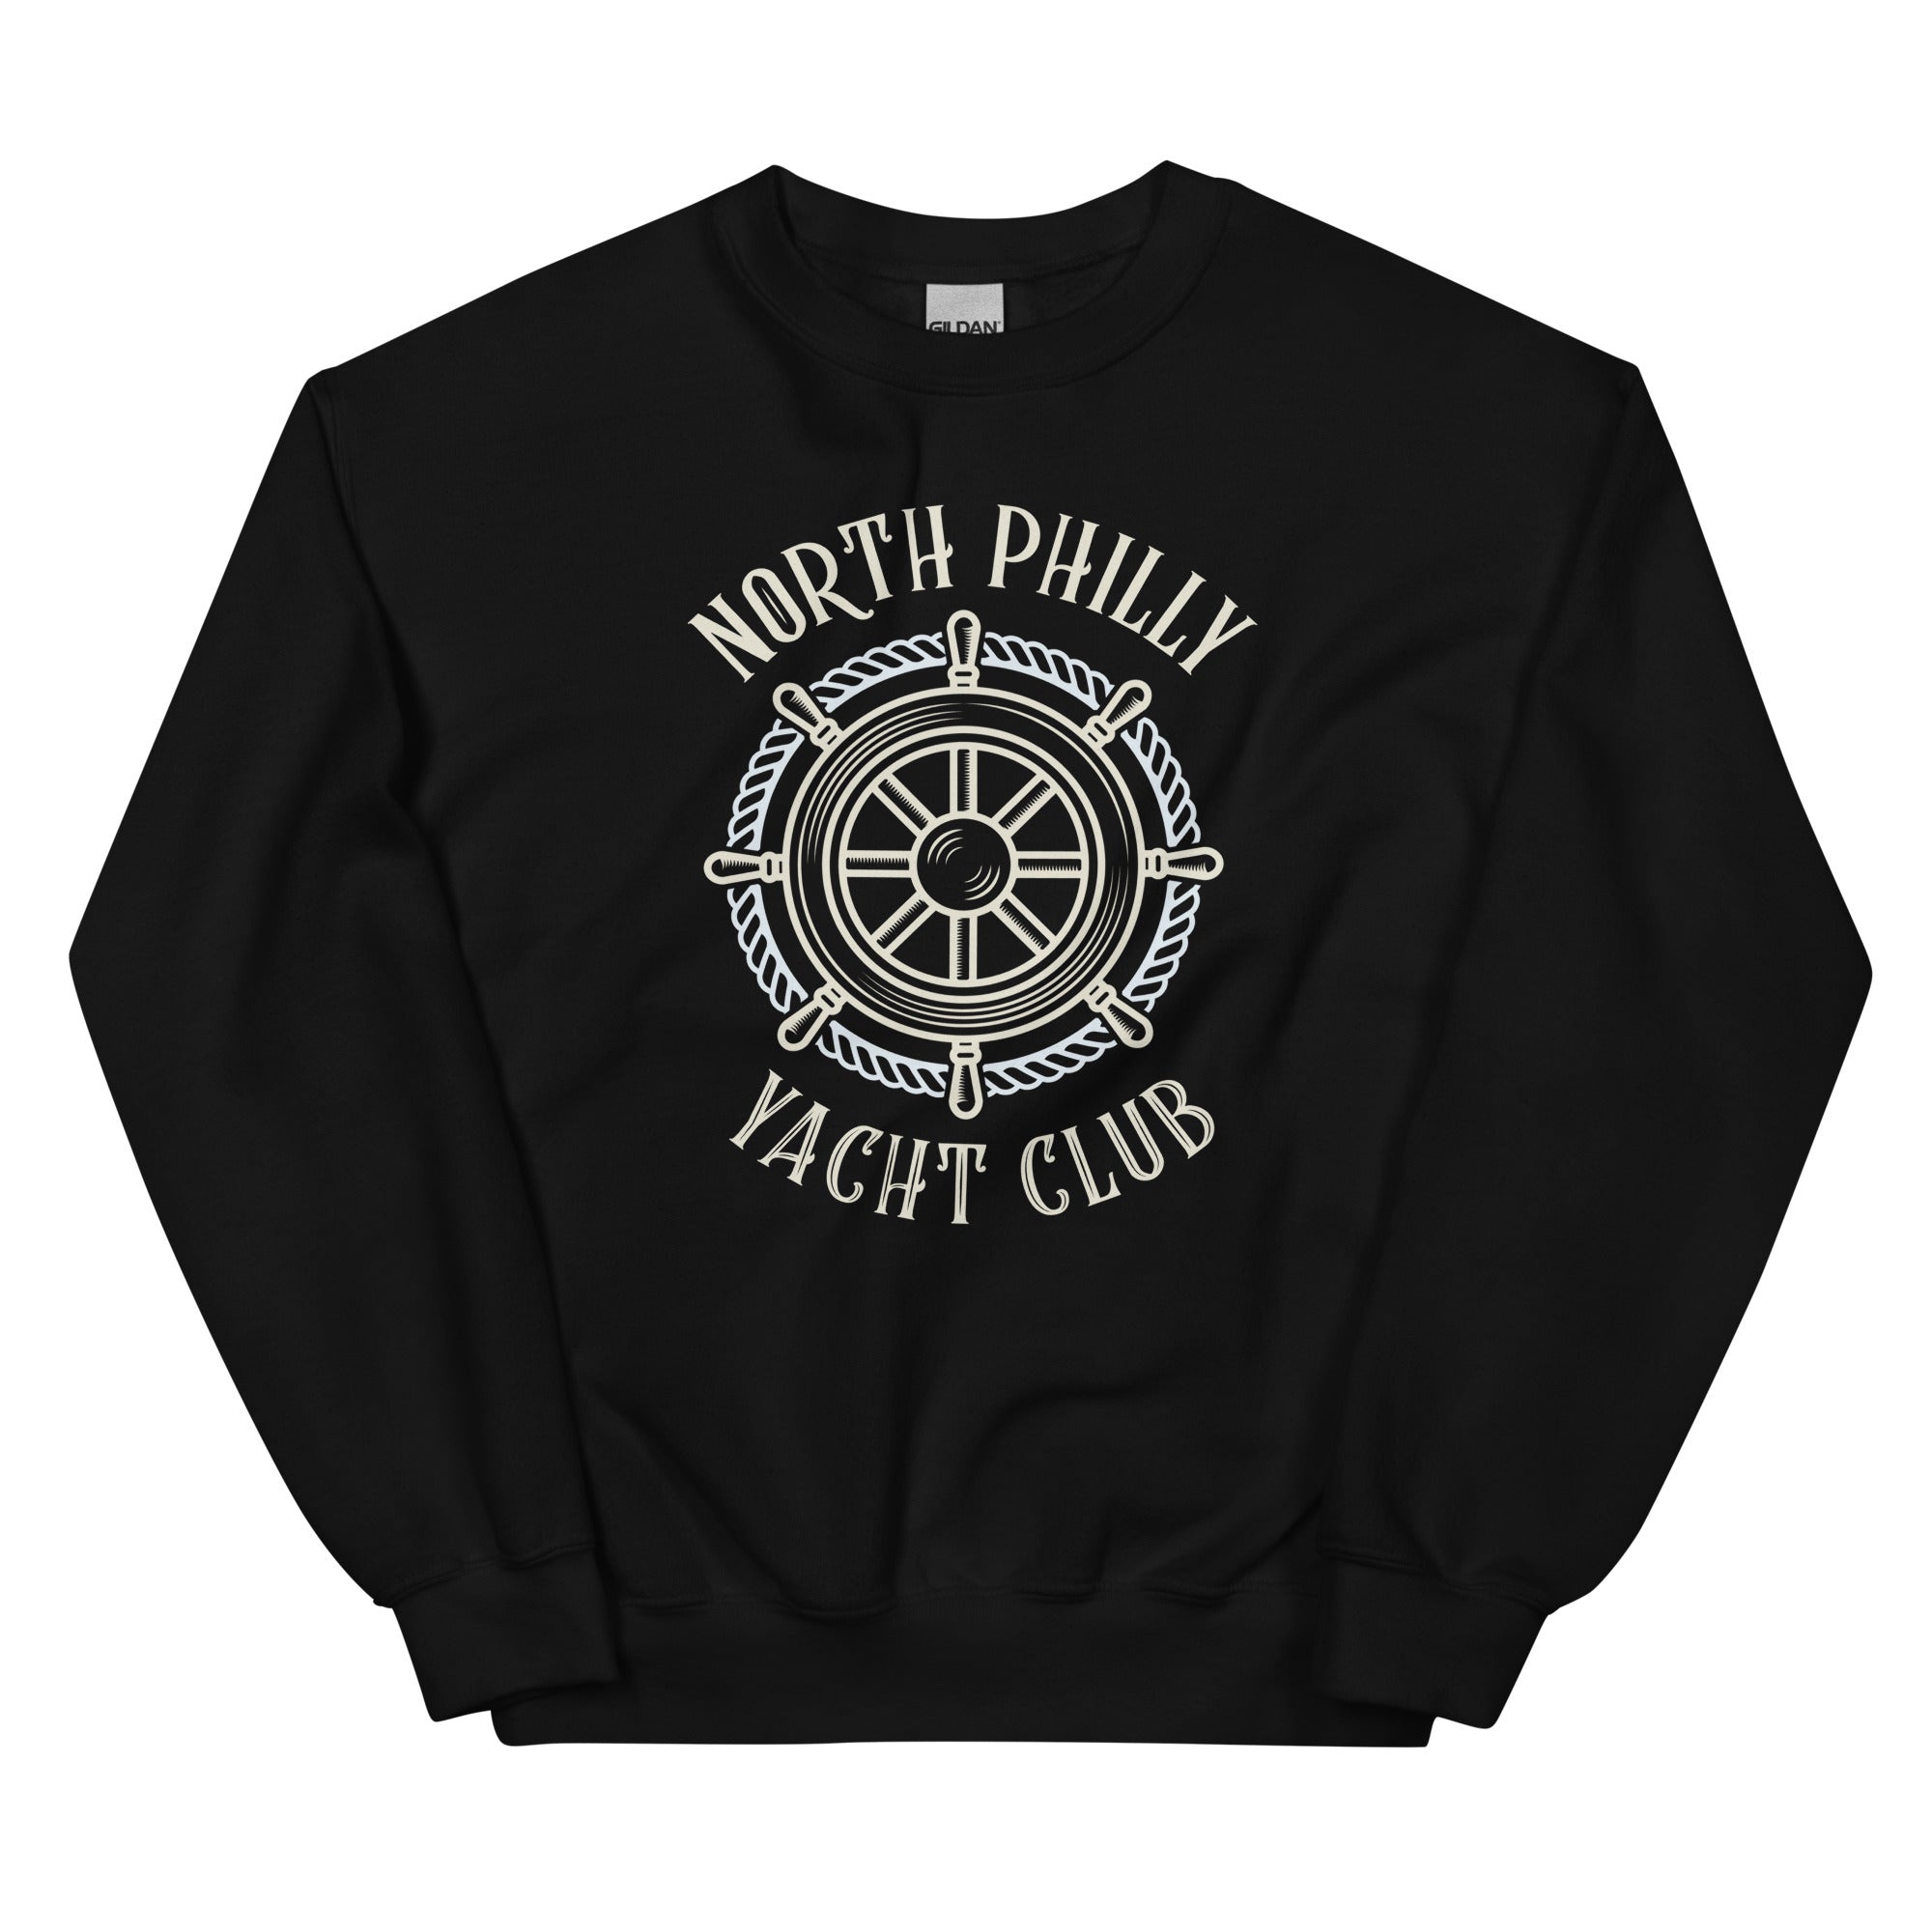 North Philly Philadelphia yacht club black sweatshirt Phillygoat